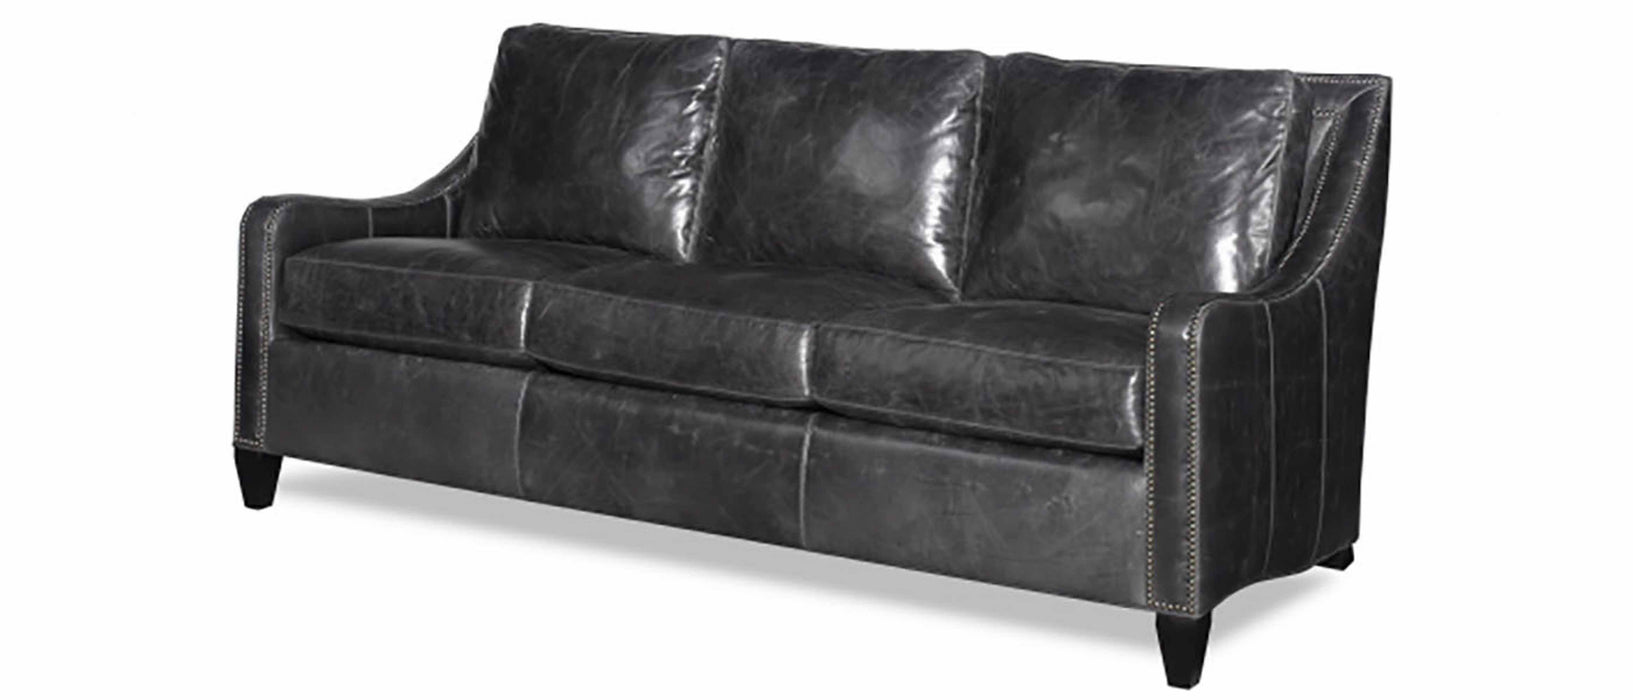 Harrison Leather Queen Size Sofa Sleeper